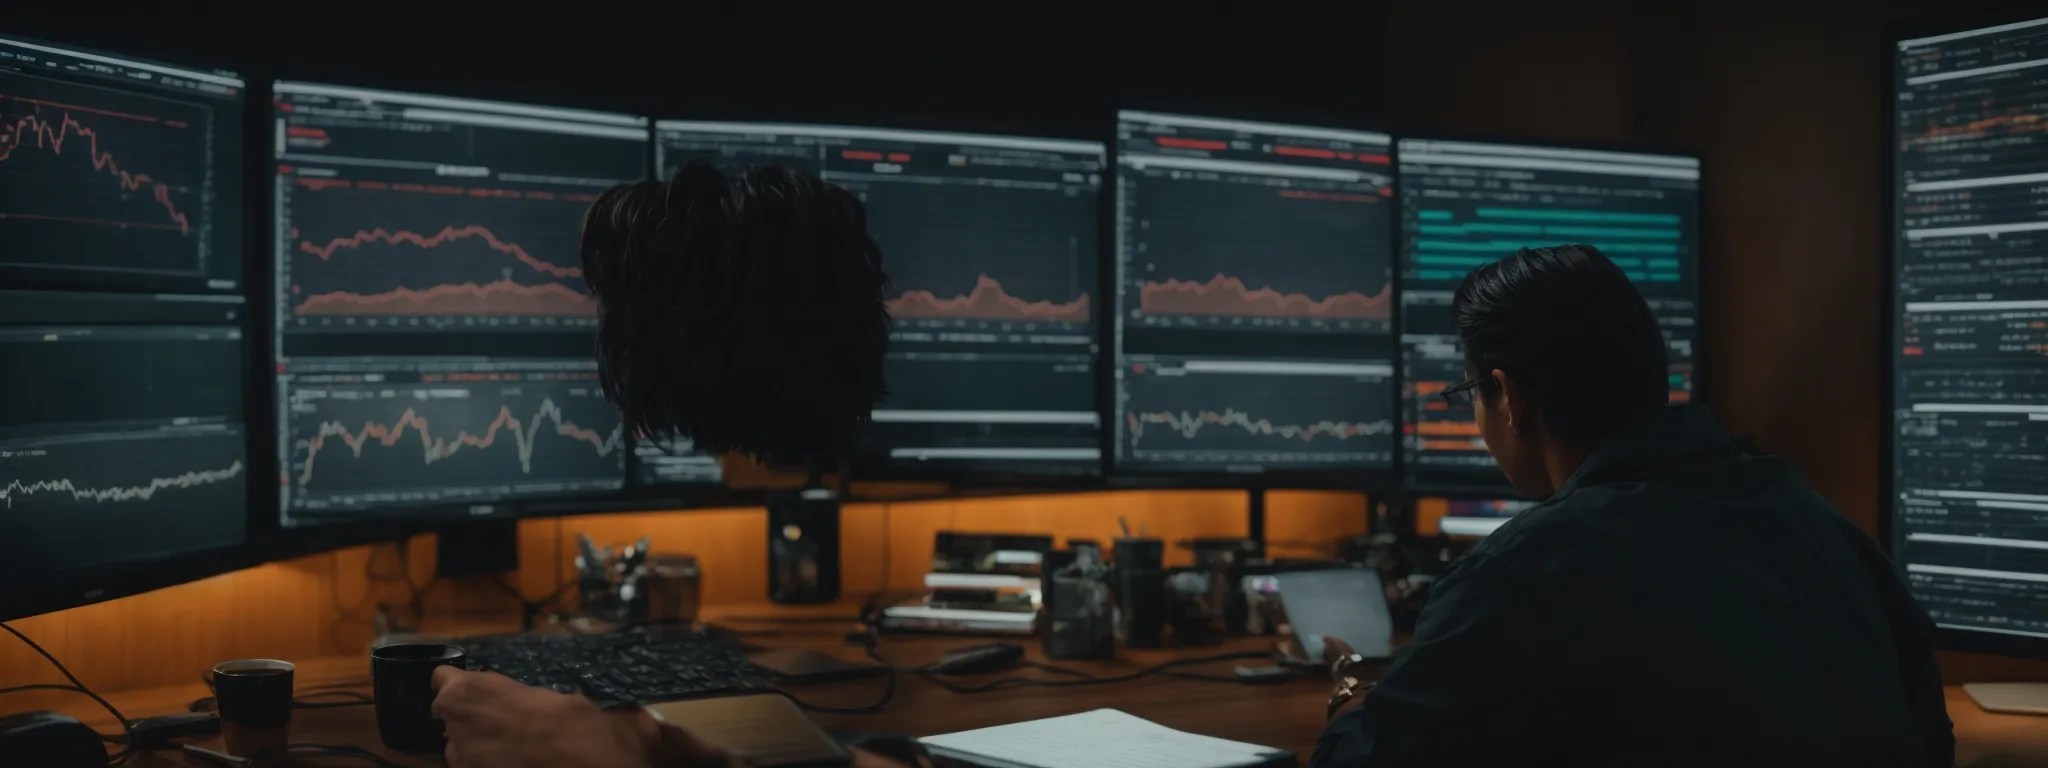 a digital marketer intently analyzes a dashboard displaying website traffic metrics on a modern computer screen.